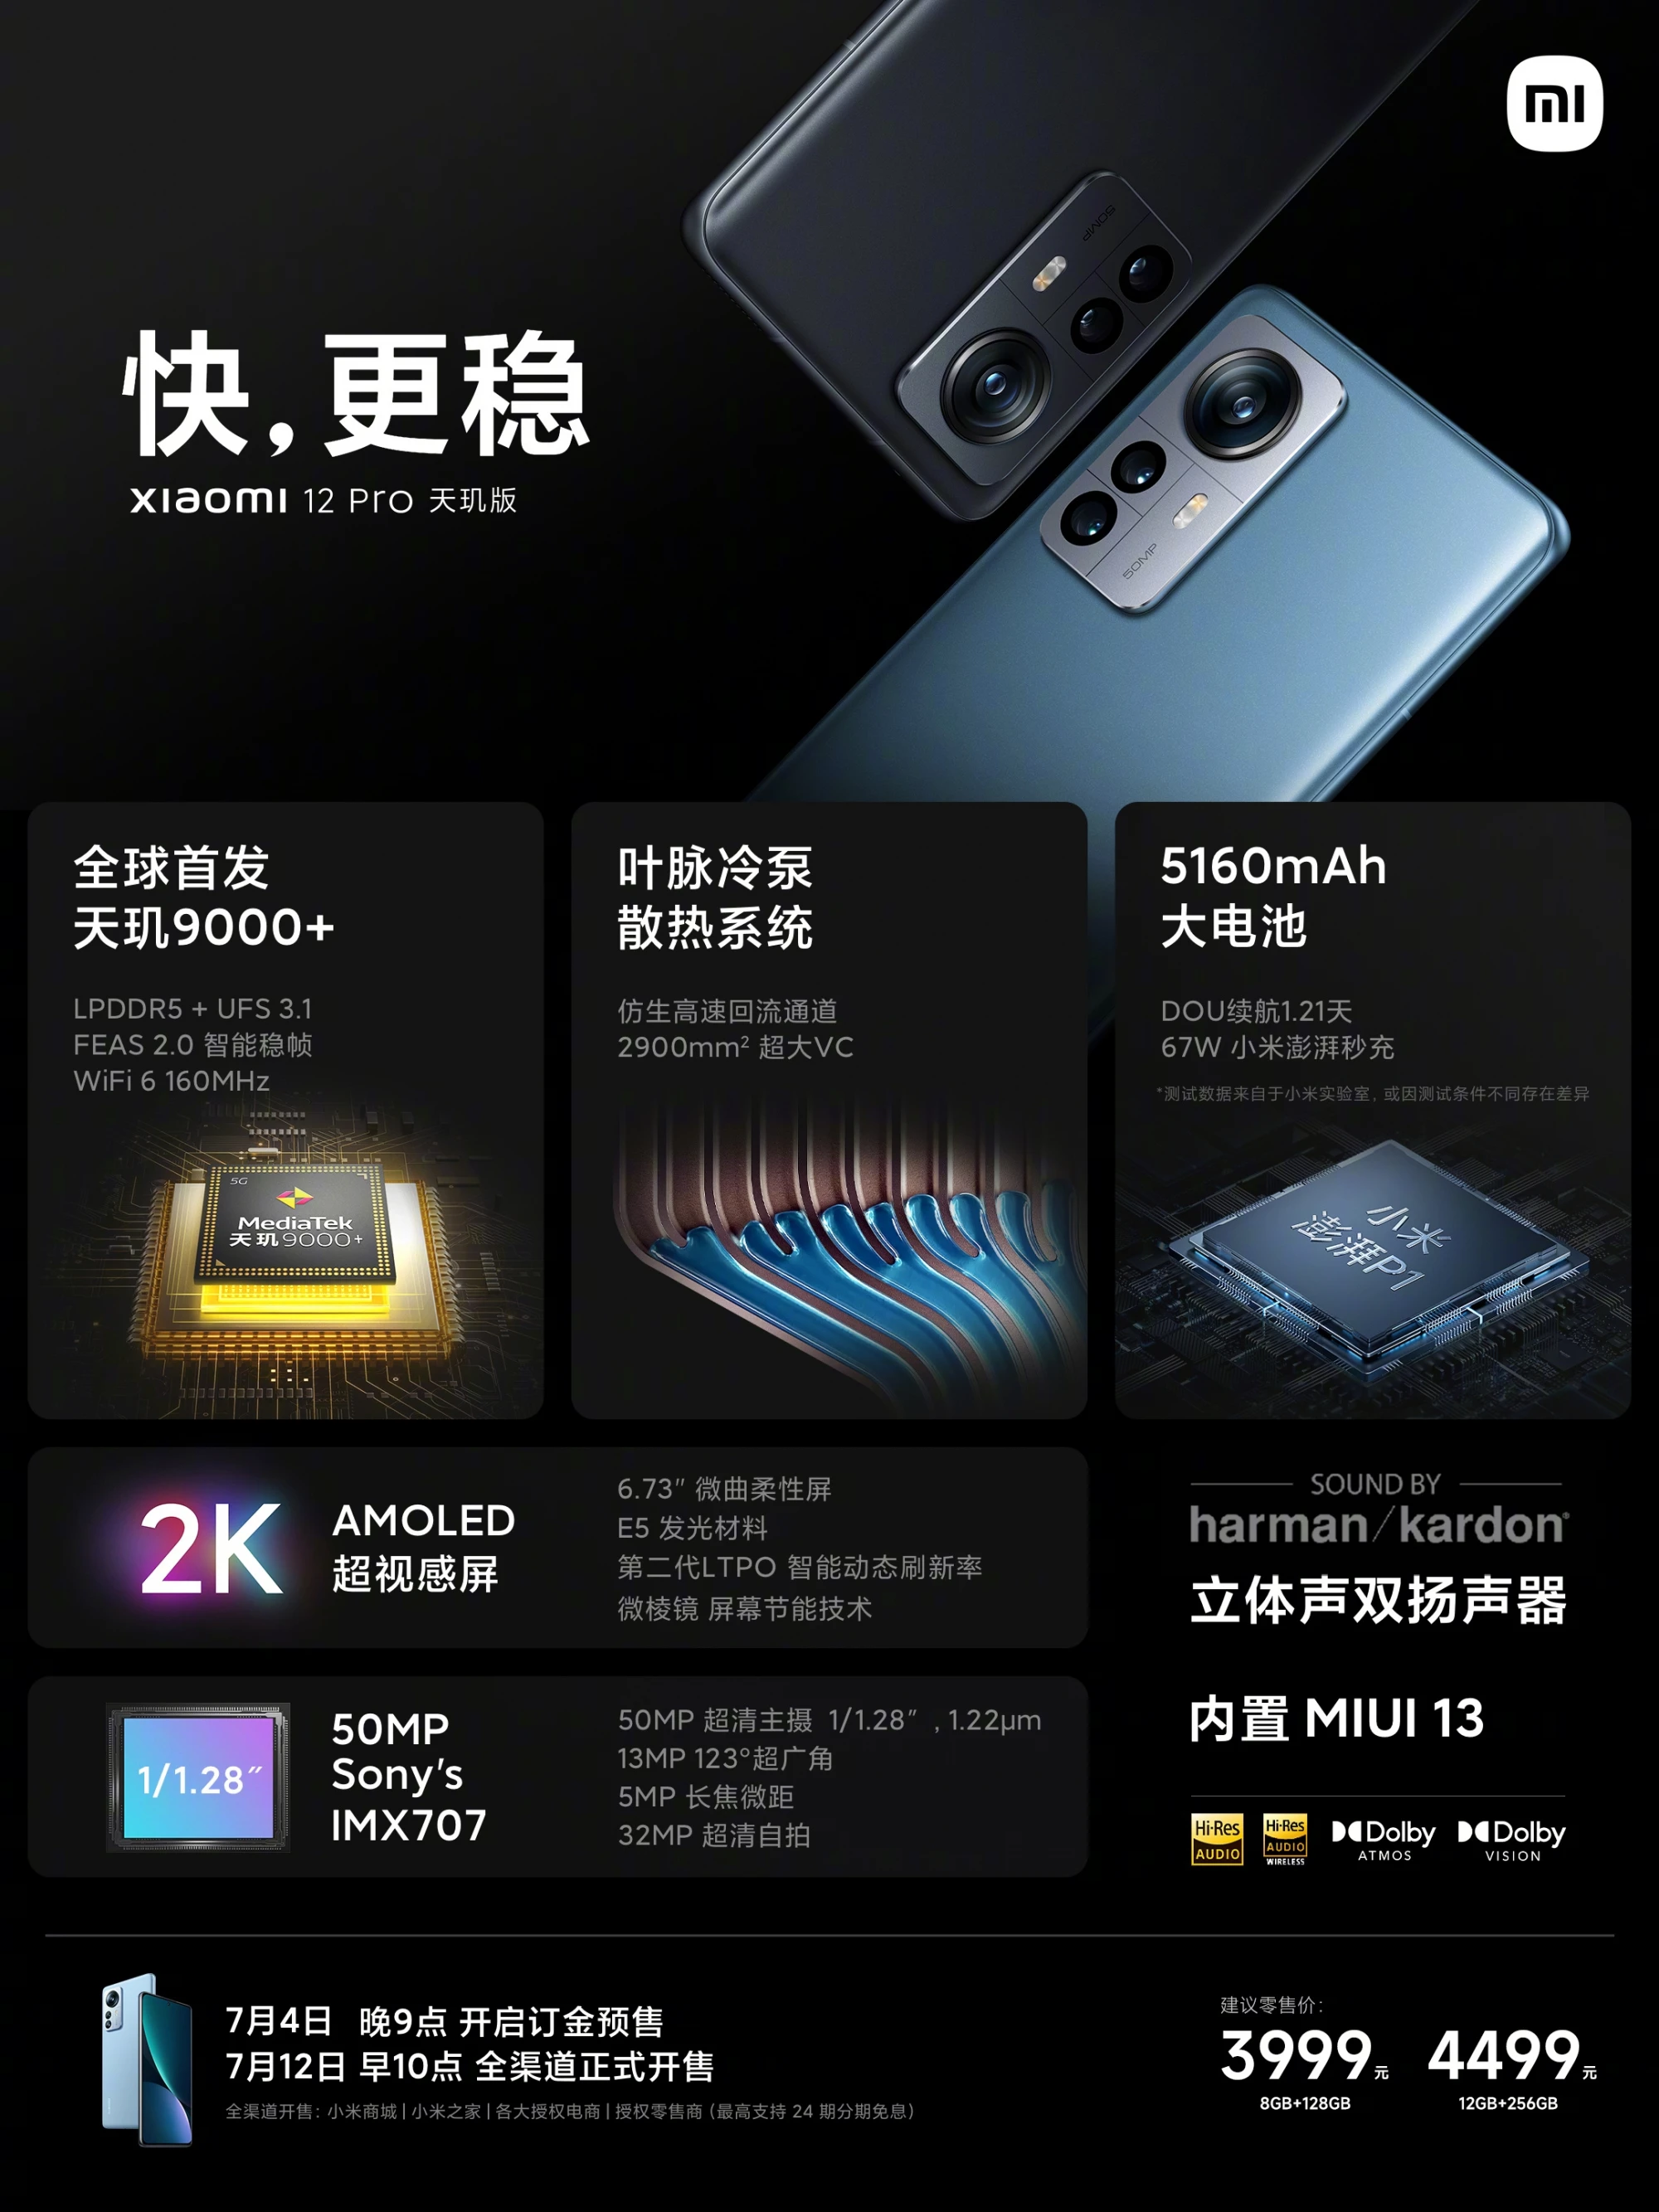 Xiaomi 12 s pro